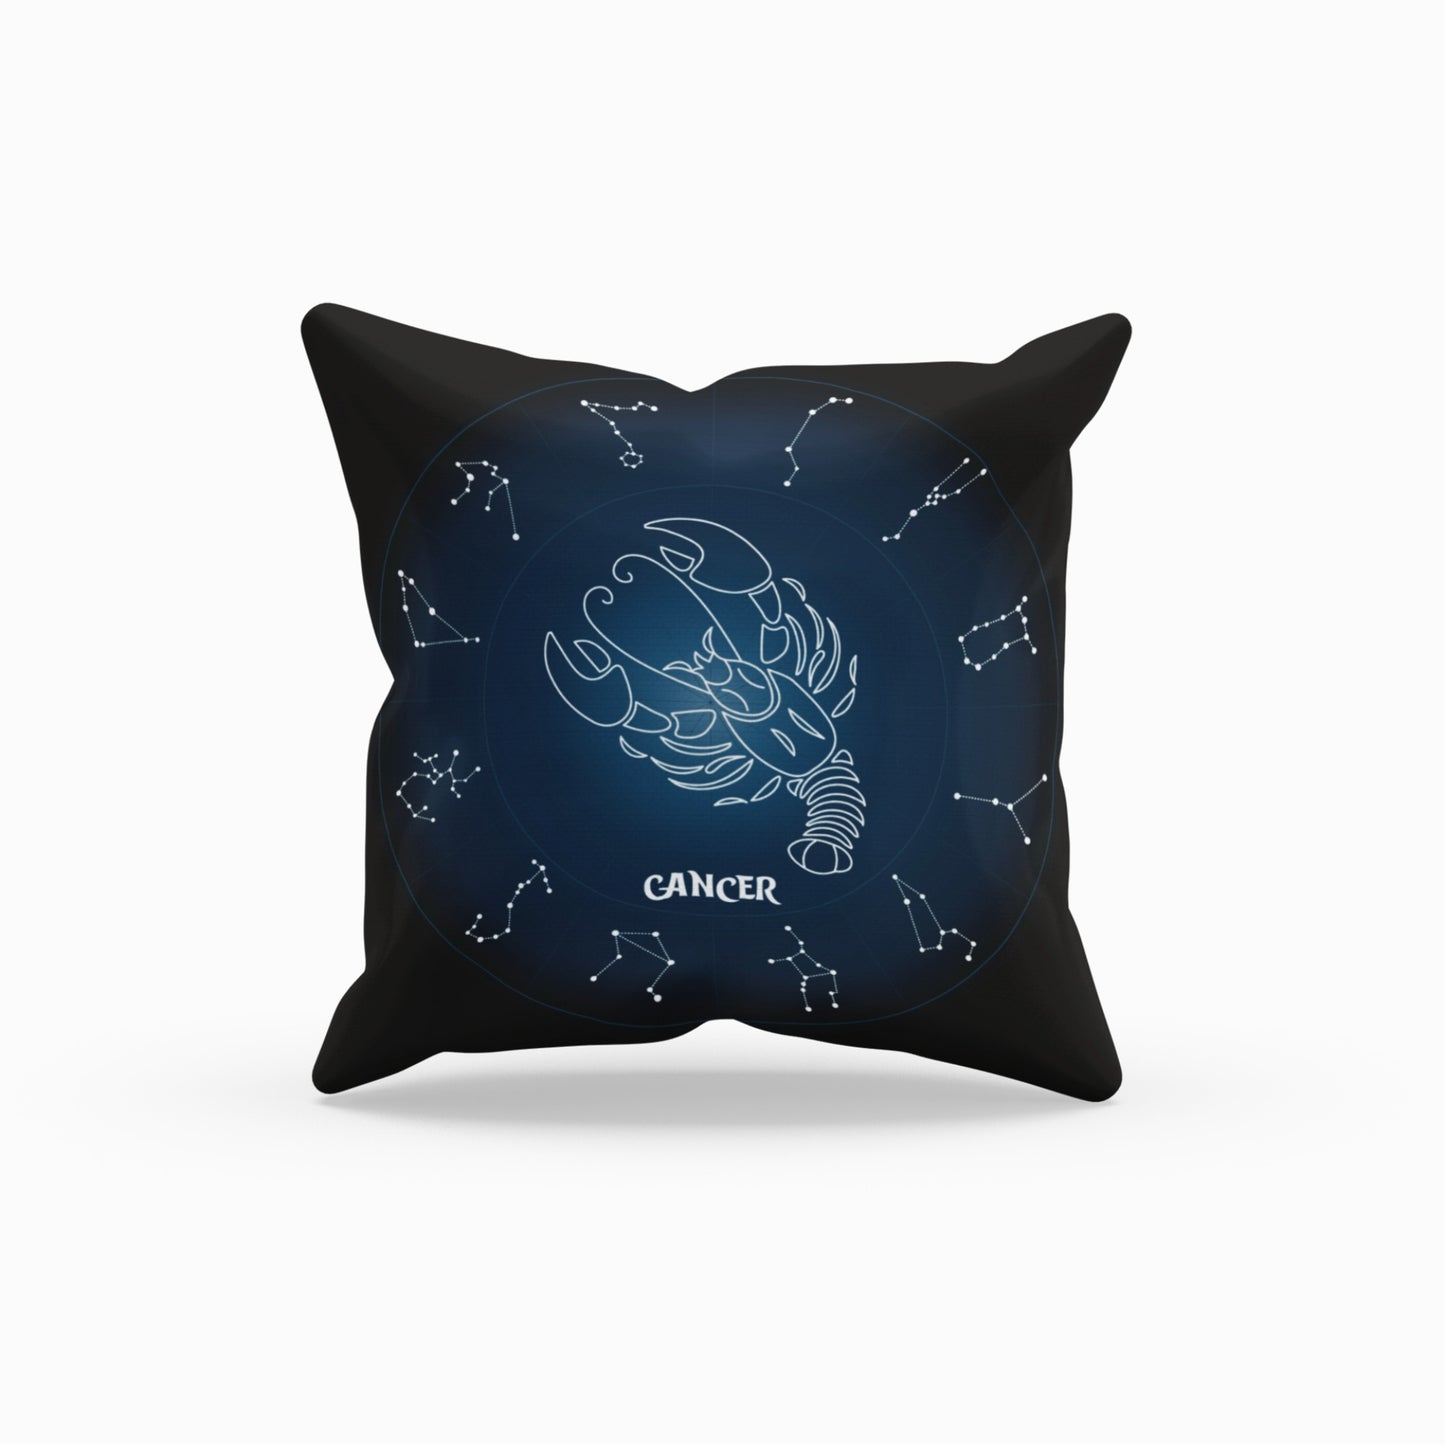 Astrology-themed Cancer Decor Pillow